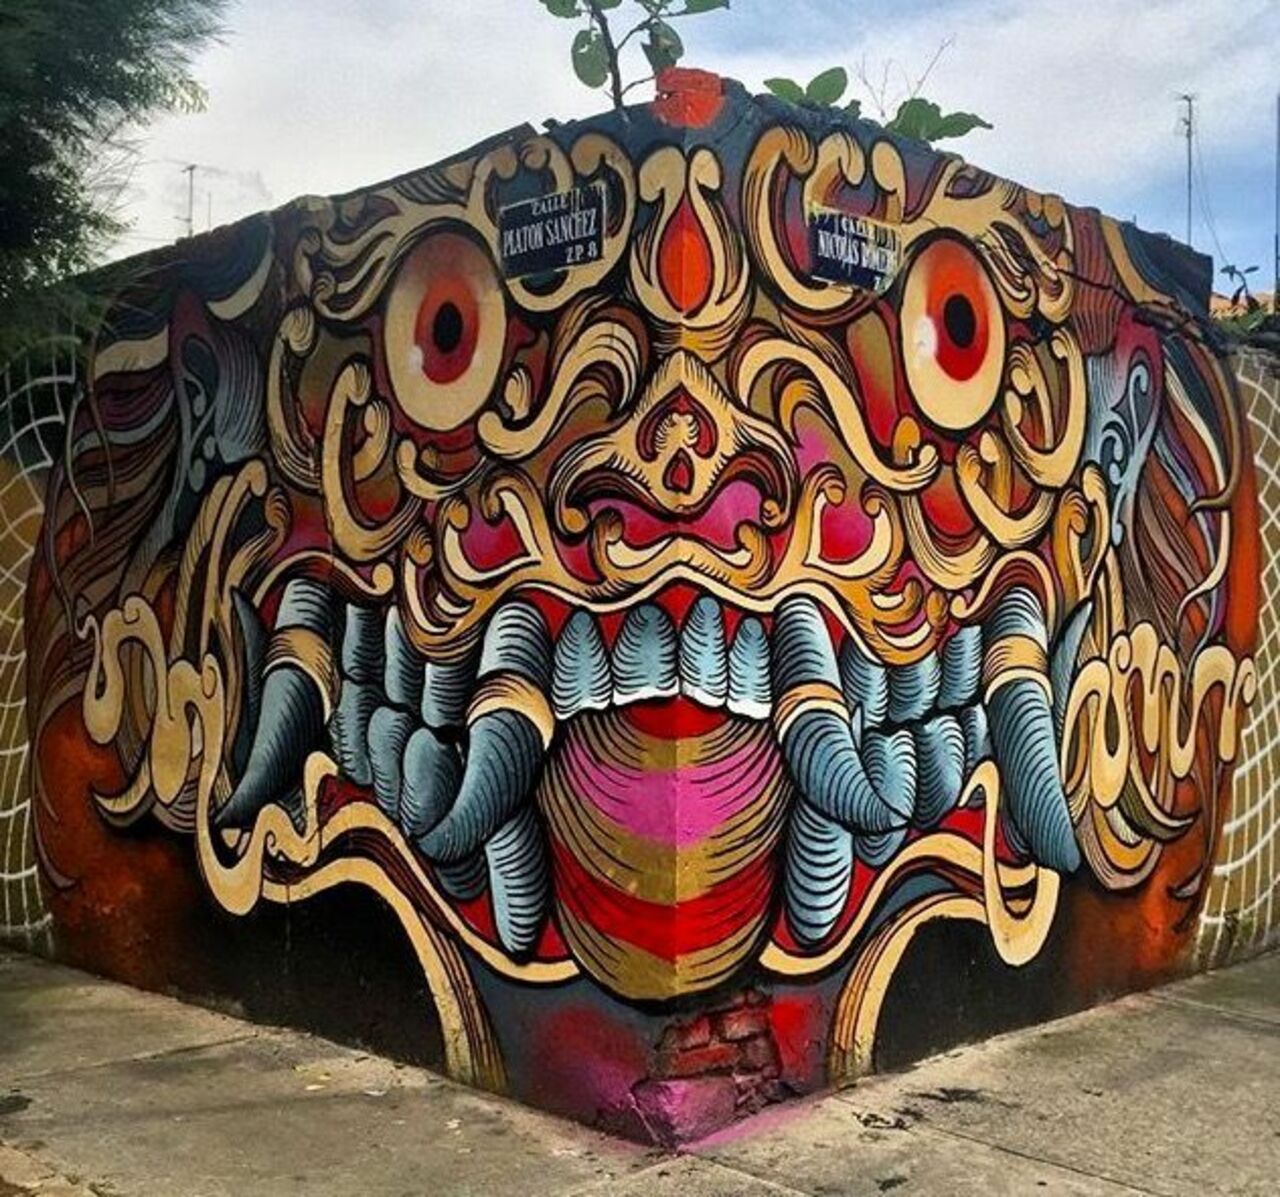 by Revost in Mexico City, 2016#streetart #mural #graffiti #art https://t.co/QxabONCwCW